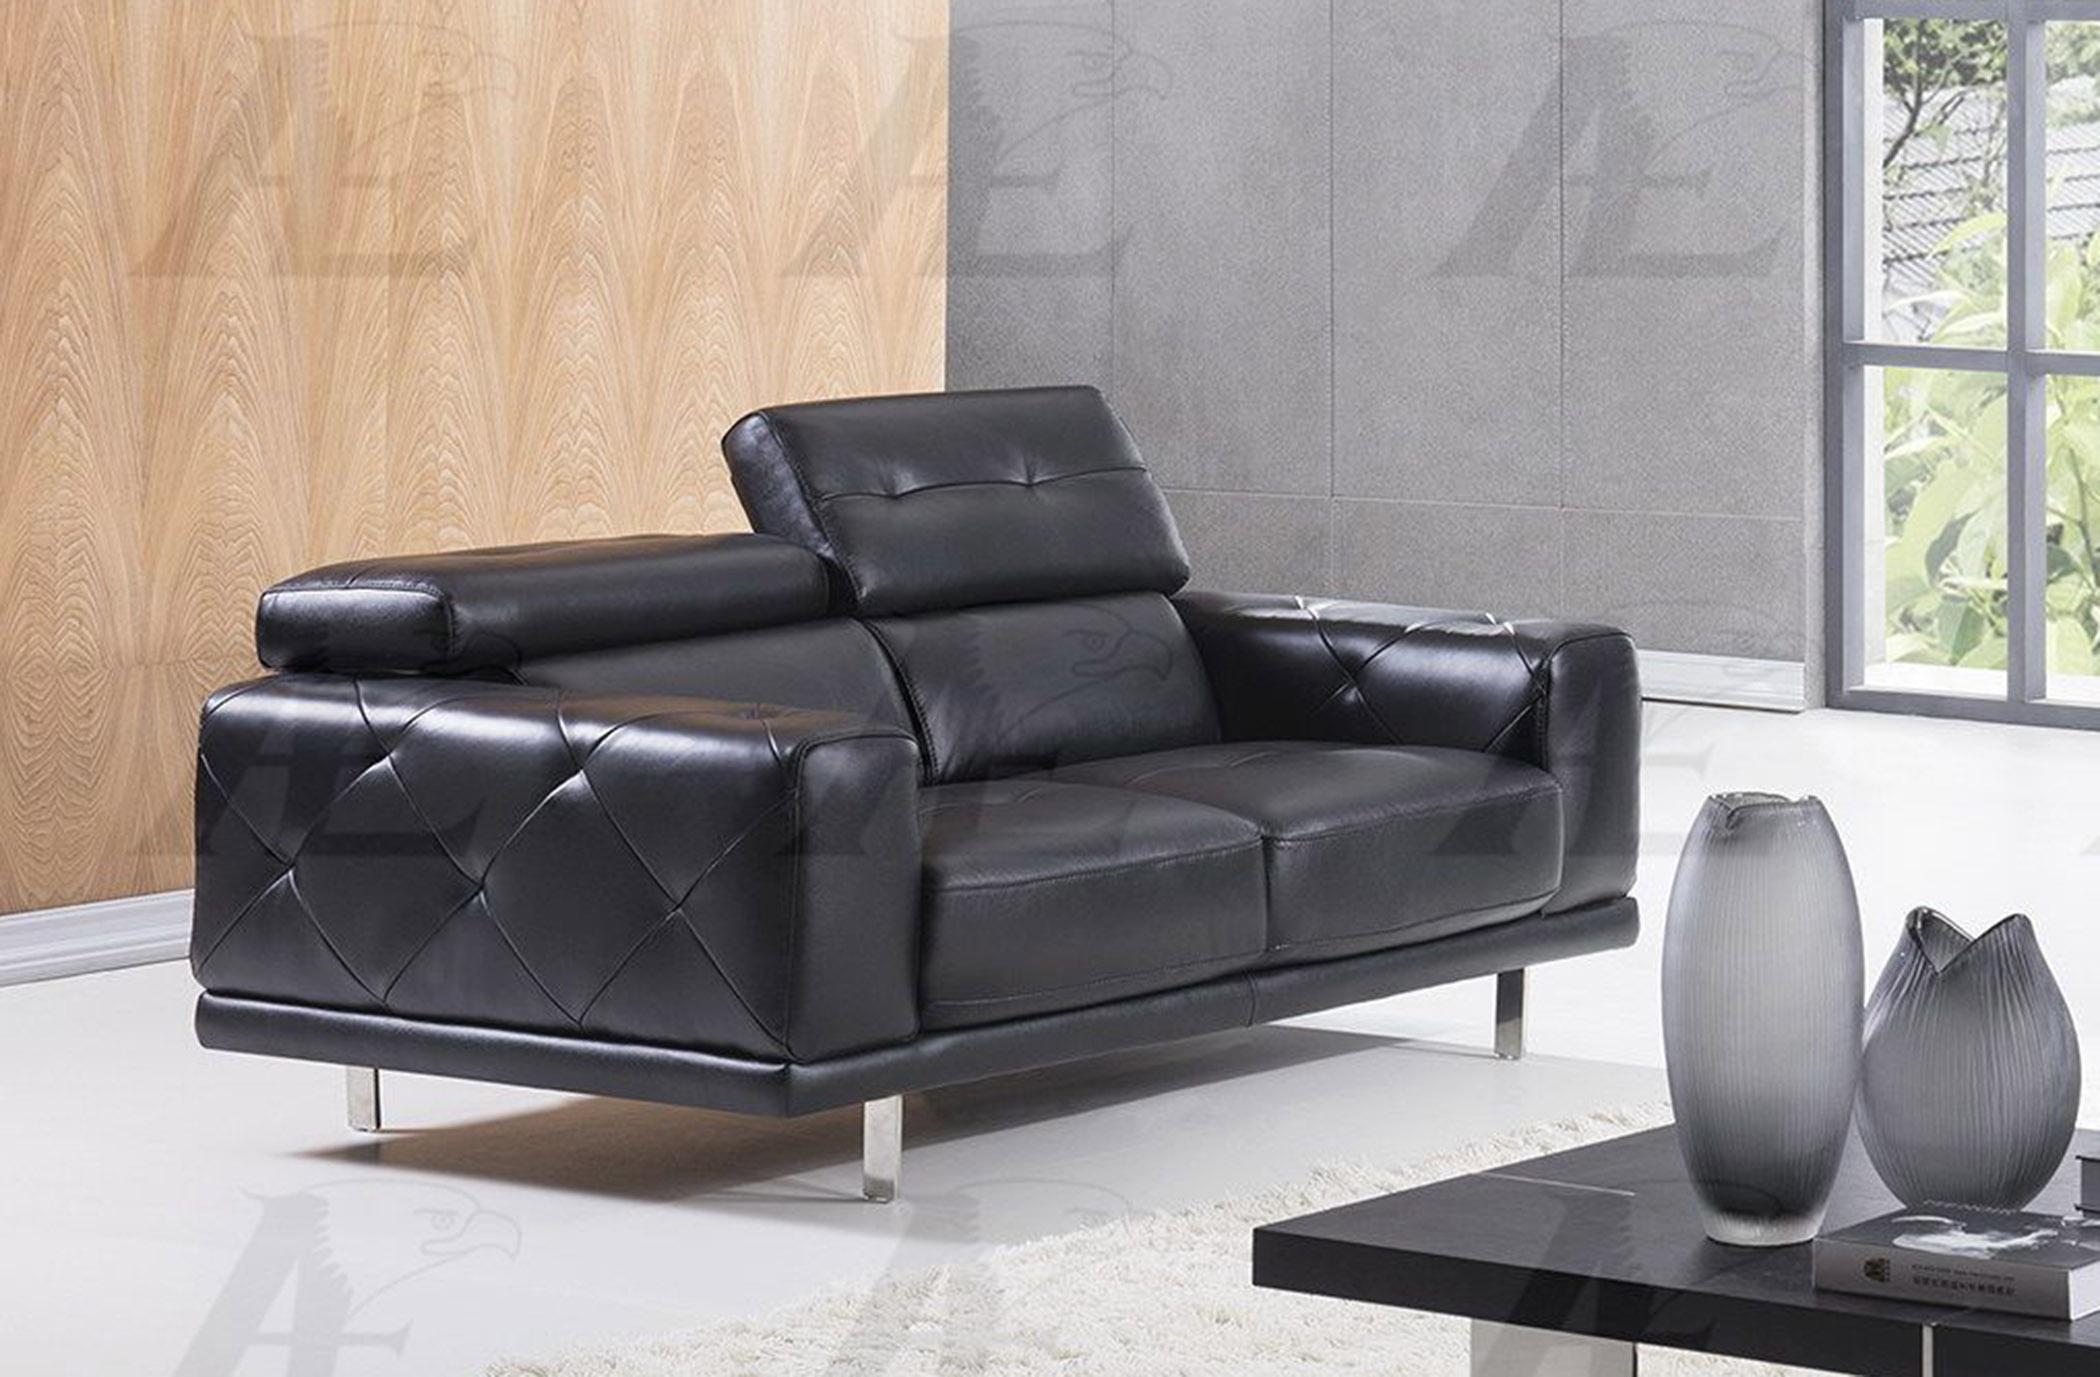 

    
American Eagle Furniture EK039-BK Sofa and Loveseat Set Black EK039-BK Set-2
